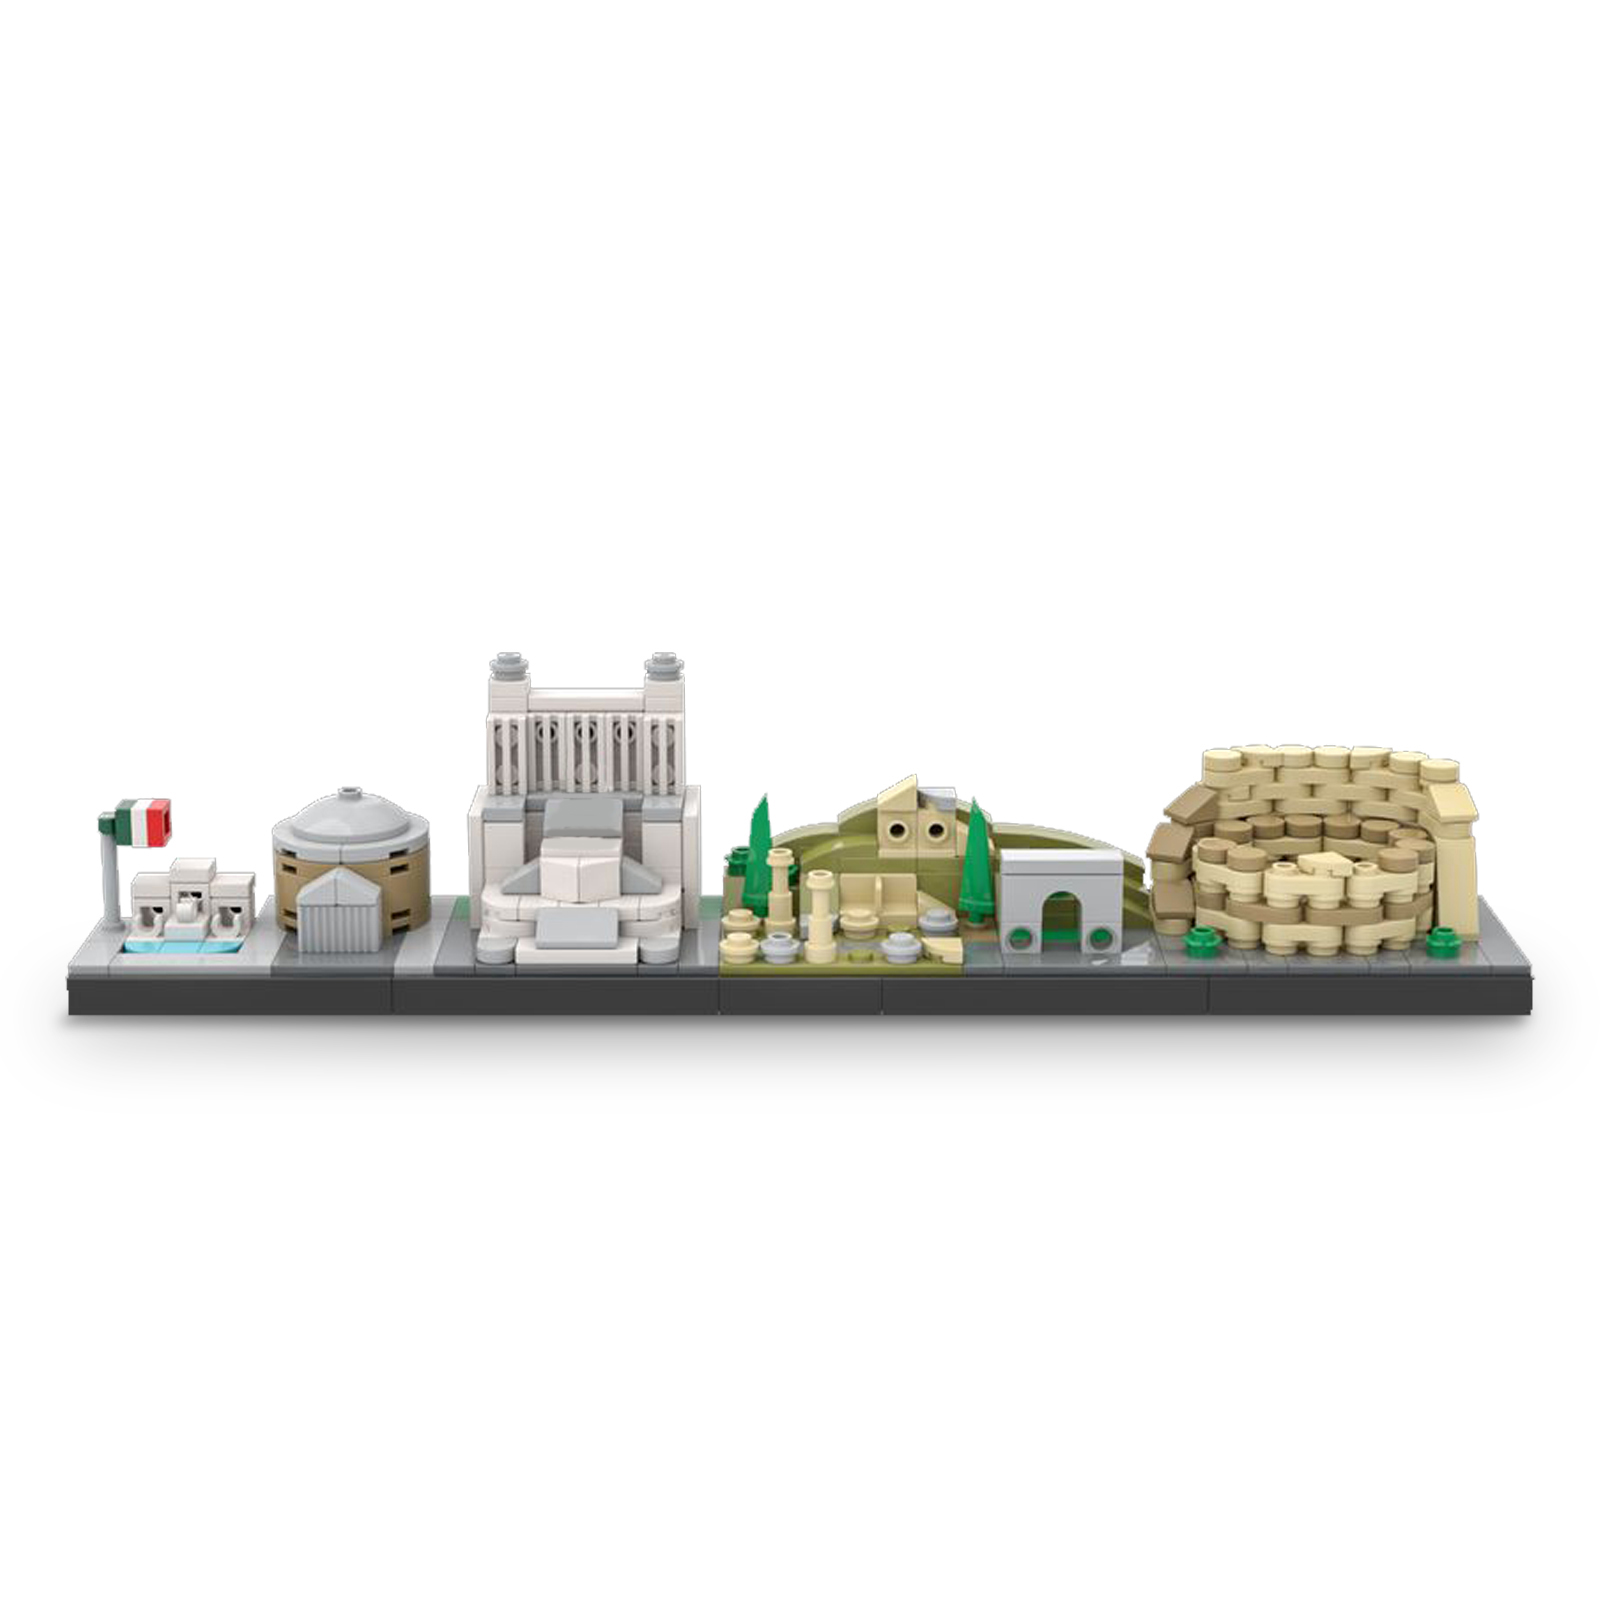 Rome Skyline MODULAR BUILDING MOC-65023 WITH 373 PIECES